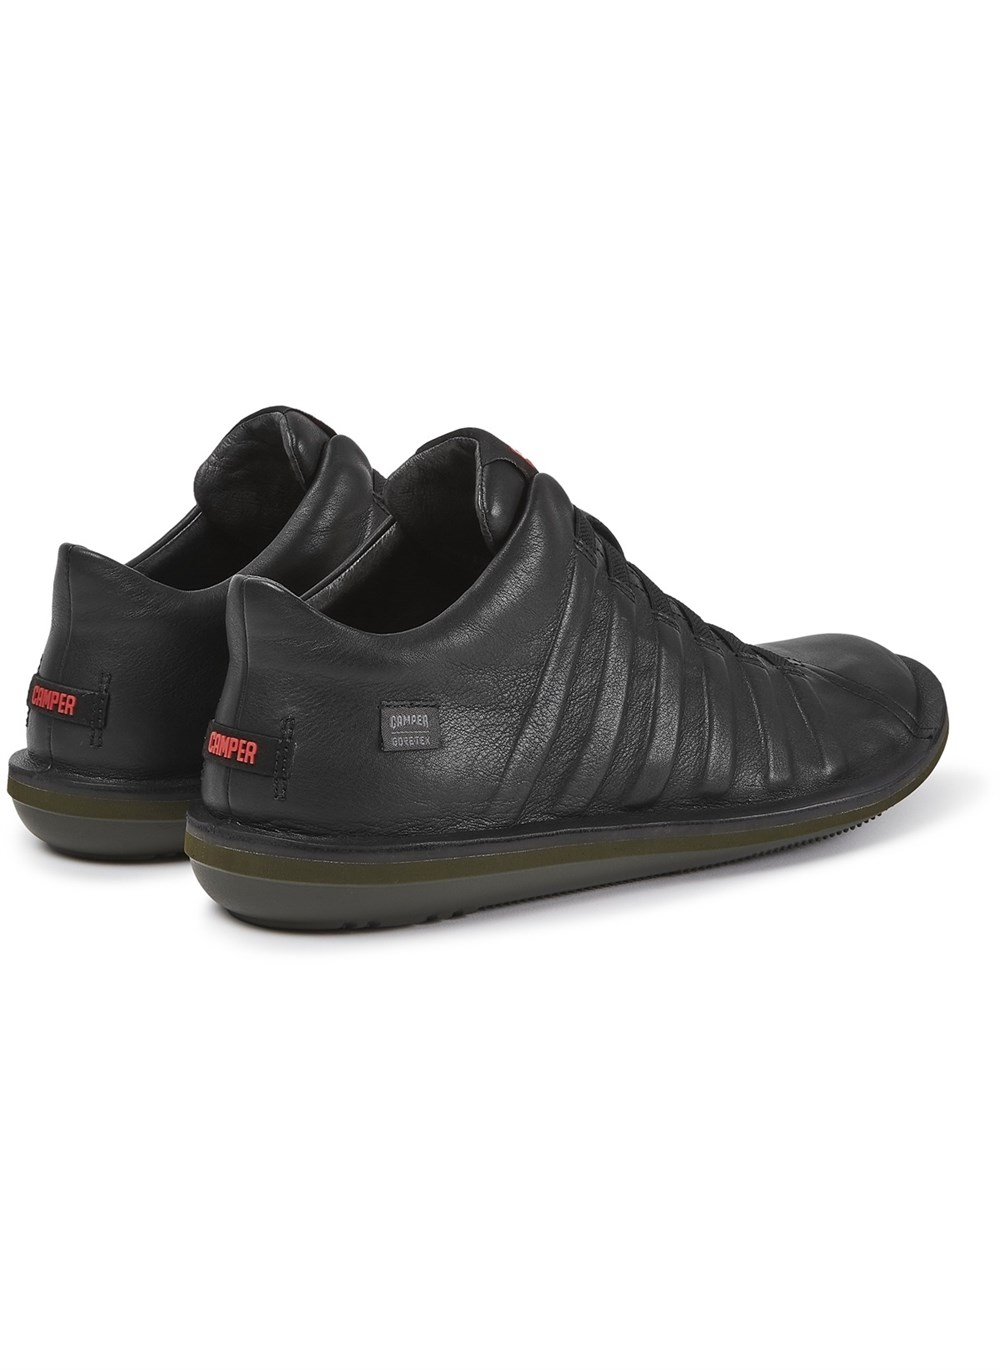 Camper Beetle GORE-TEX™ Erkek Siyah Günlük Ayakkabı K300005-017 | Camper  Modelleri